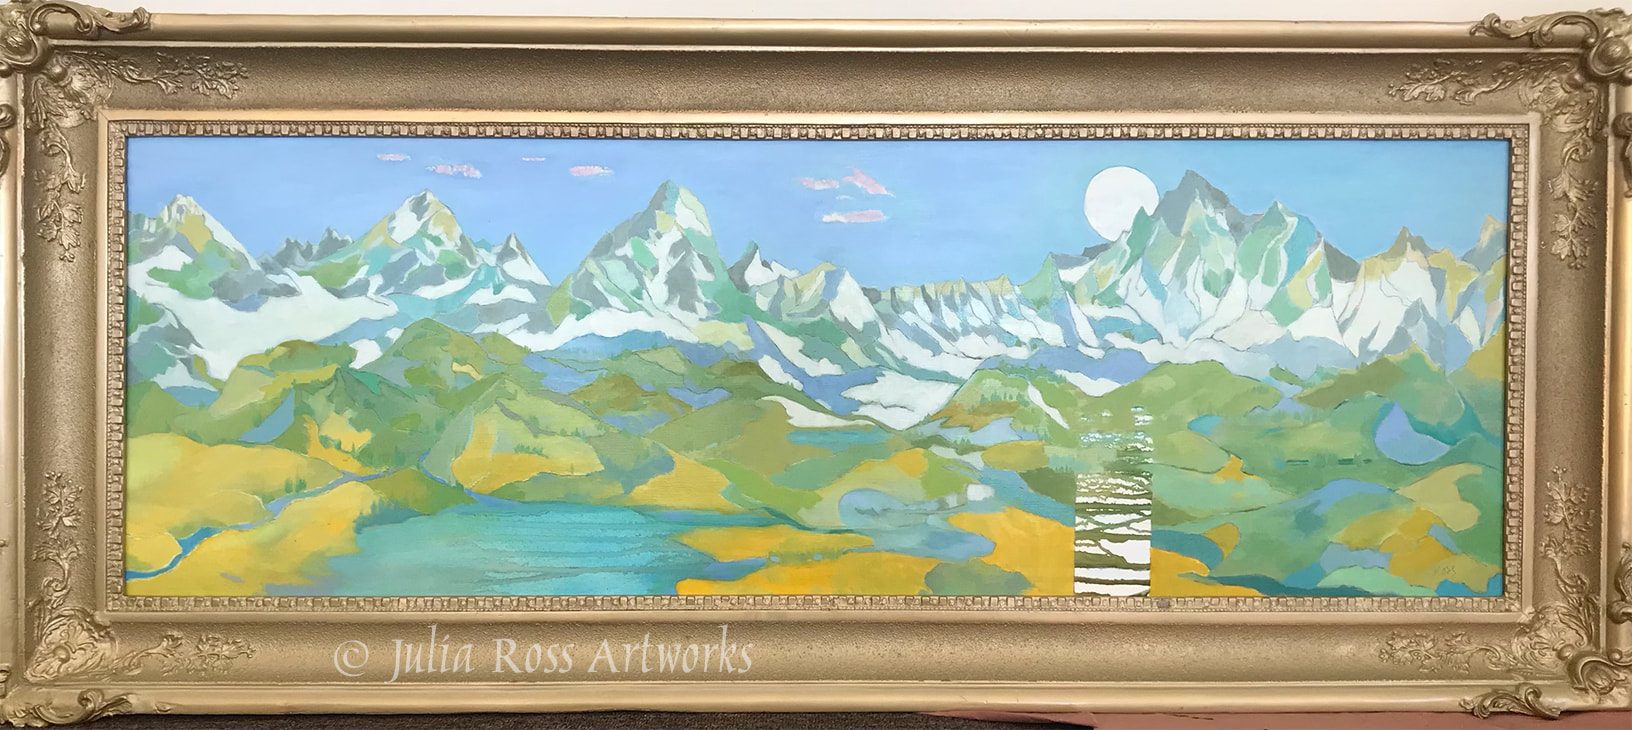 Moonrise - Highway 395  - Julia Ross Artworks